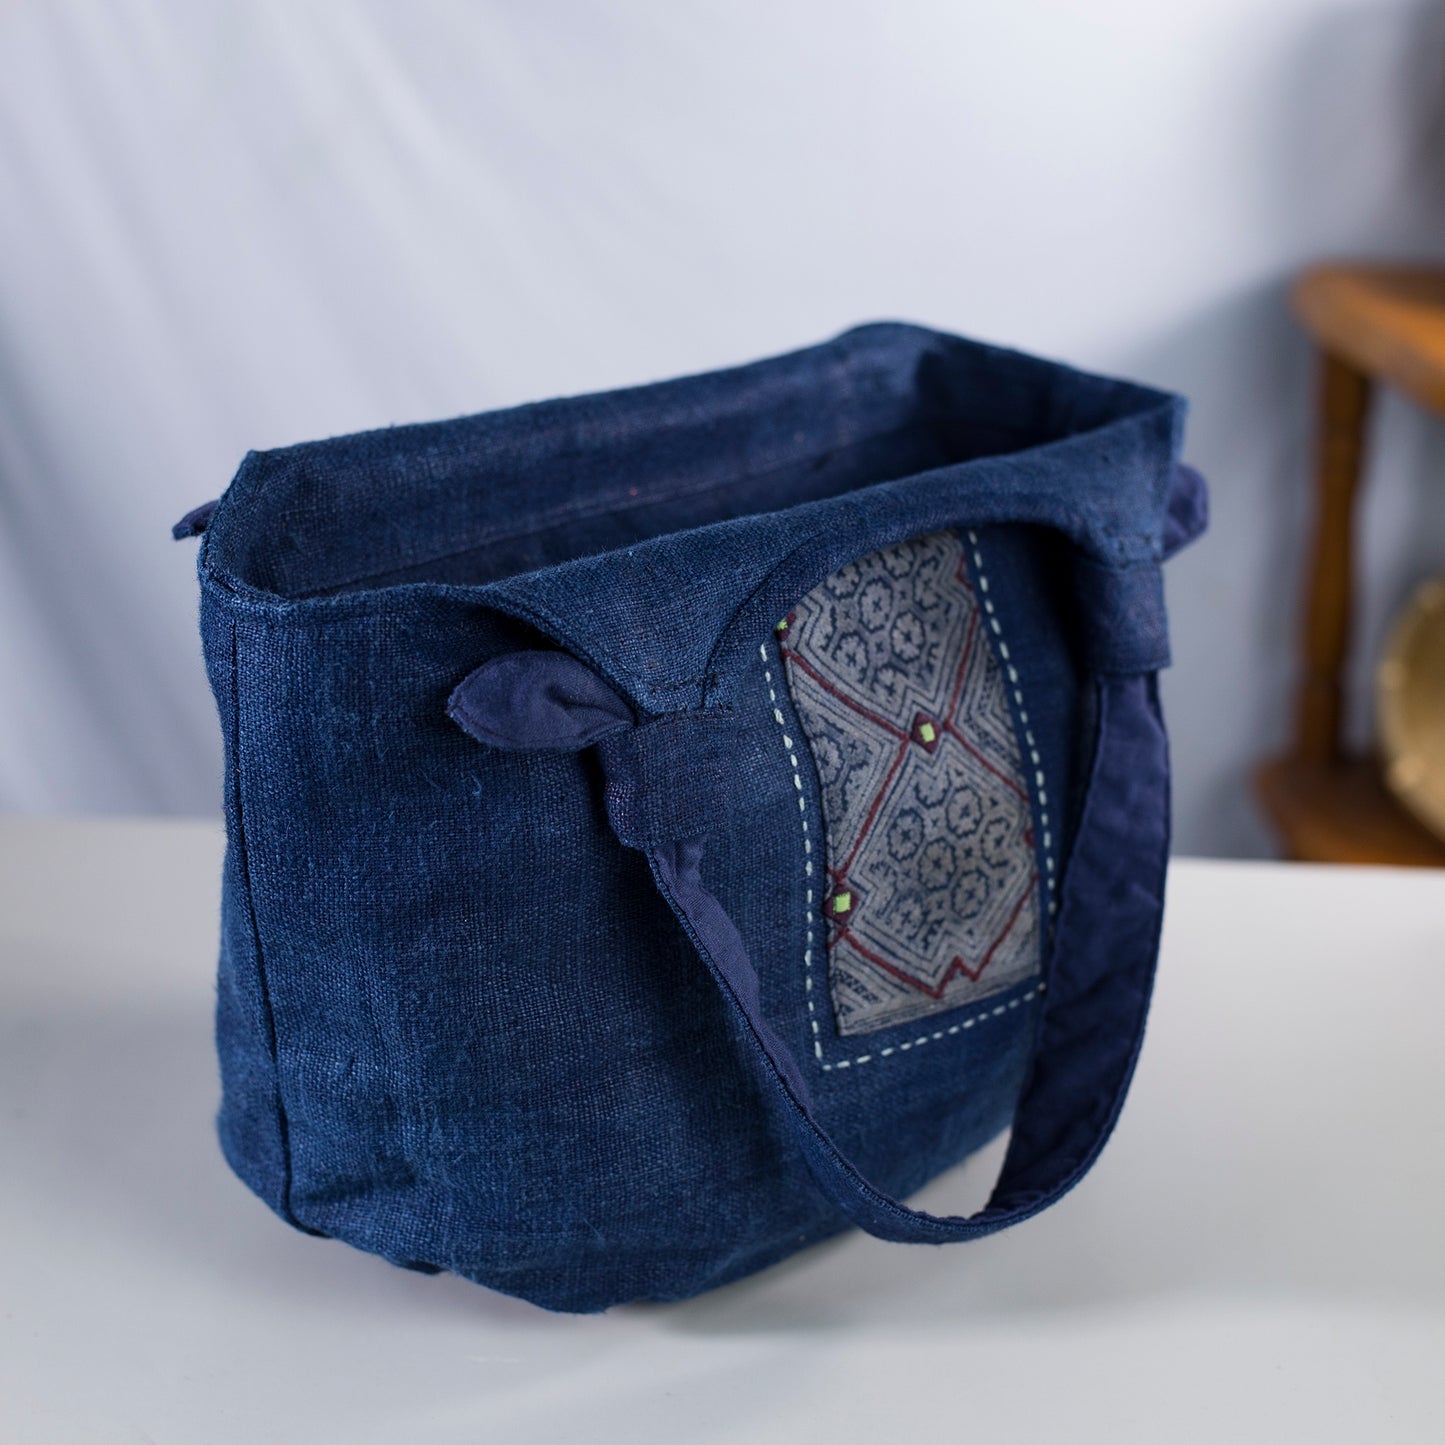 Bunny ear handbag, natural hemp in BLUE with vintage patch